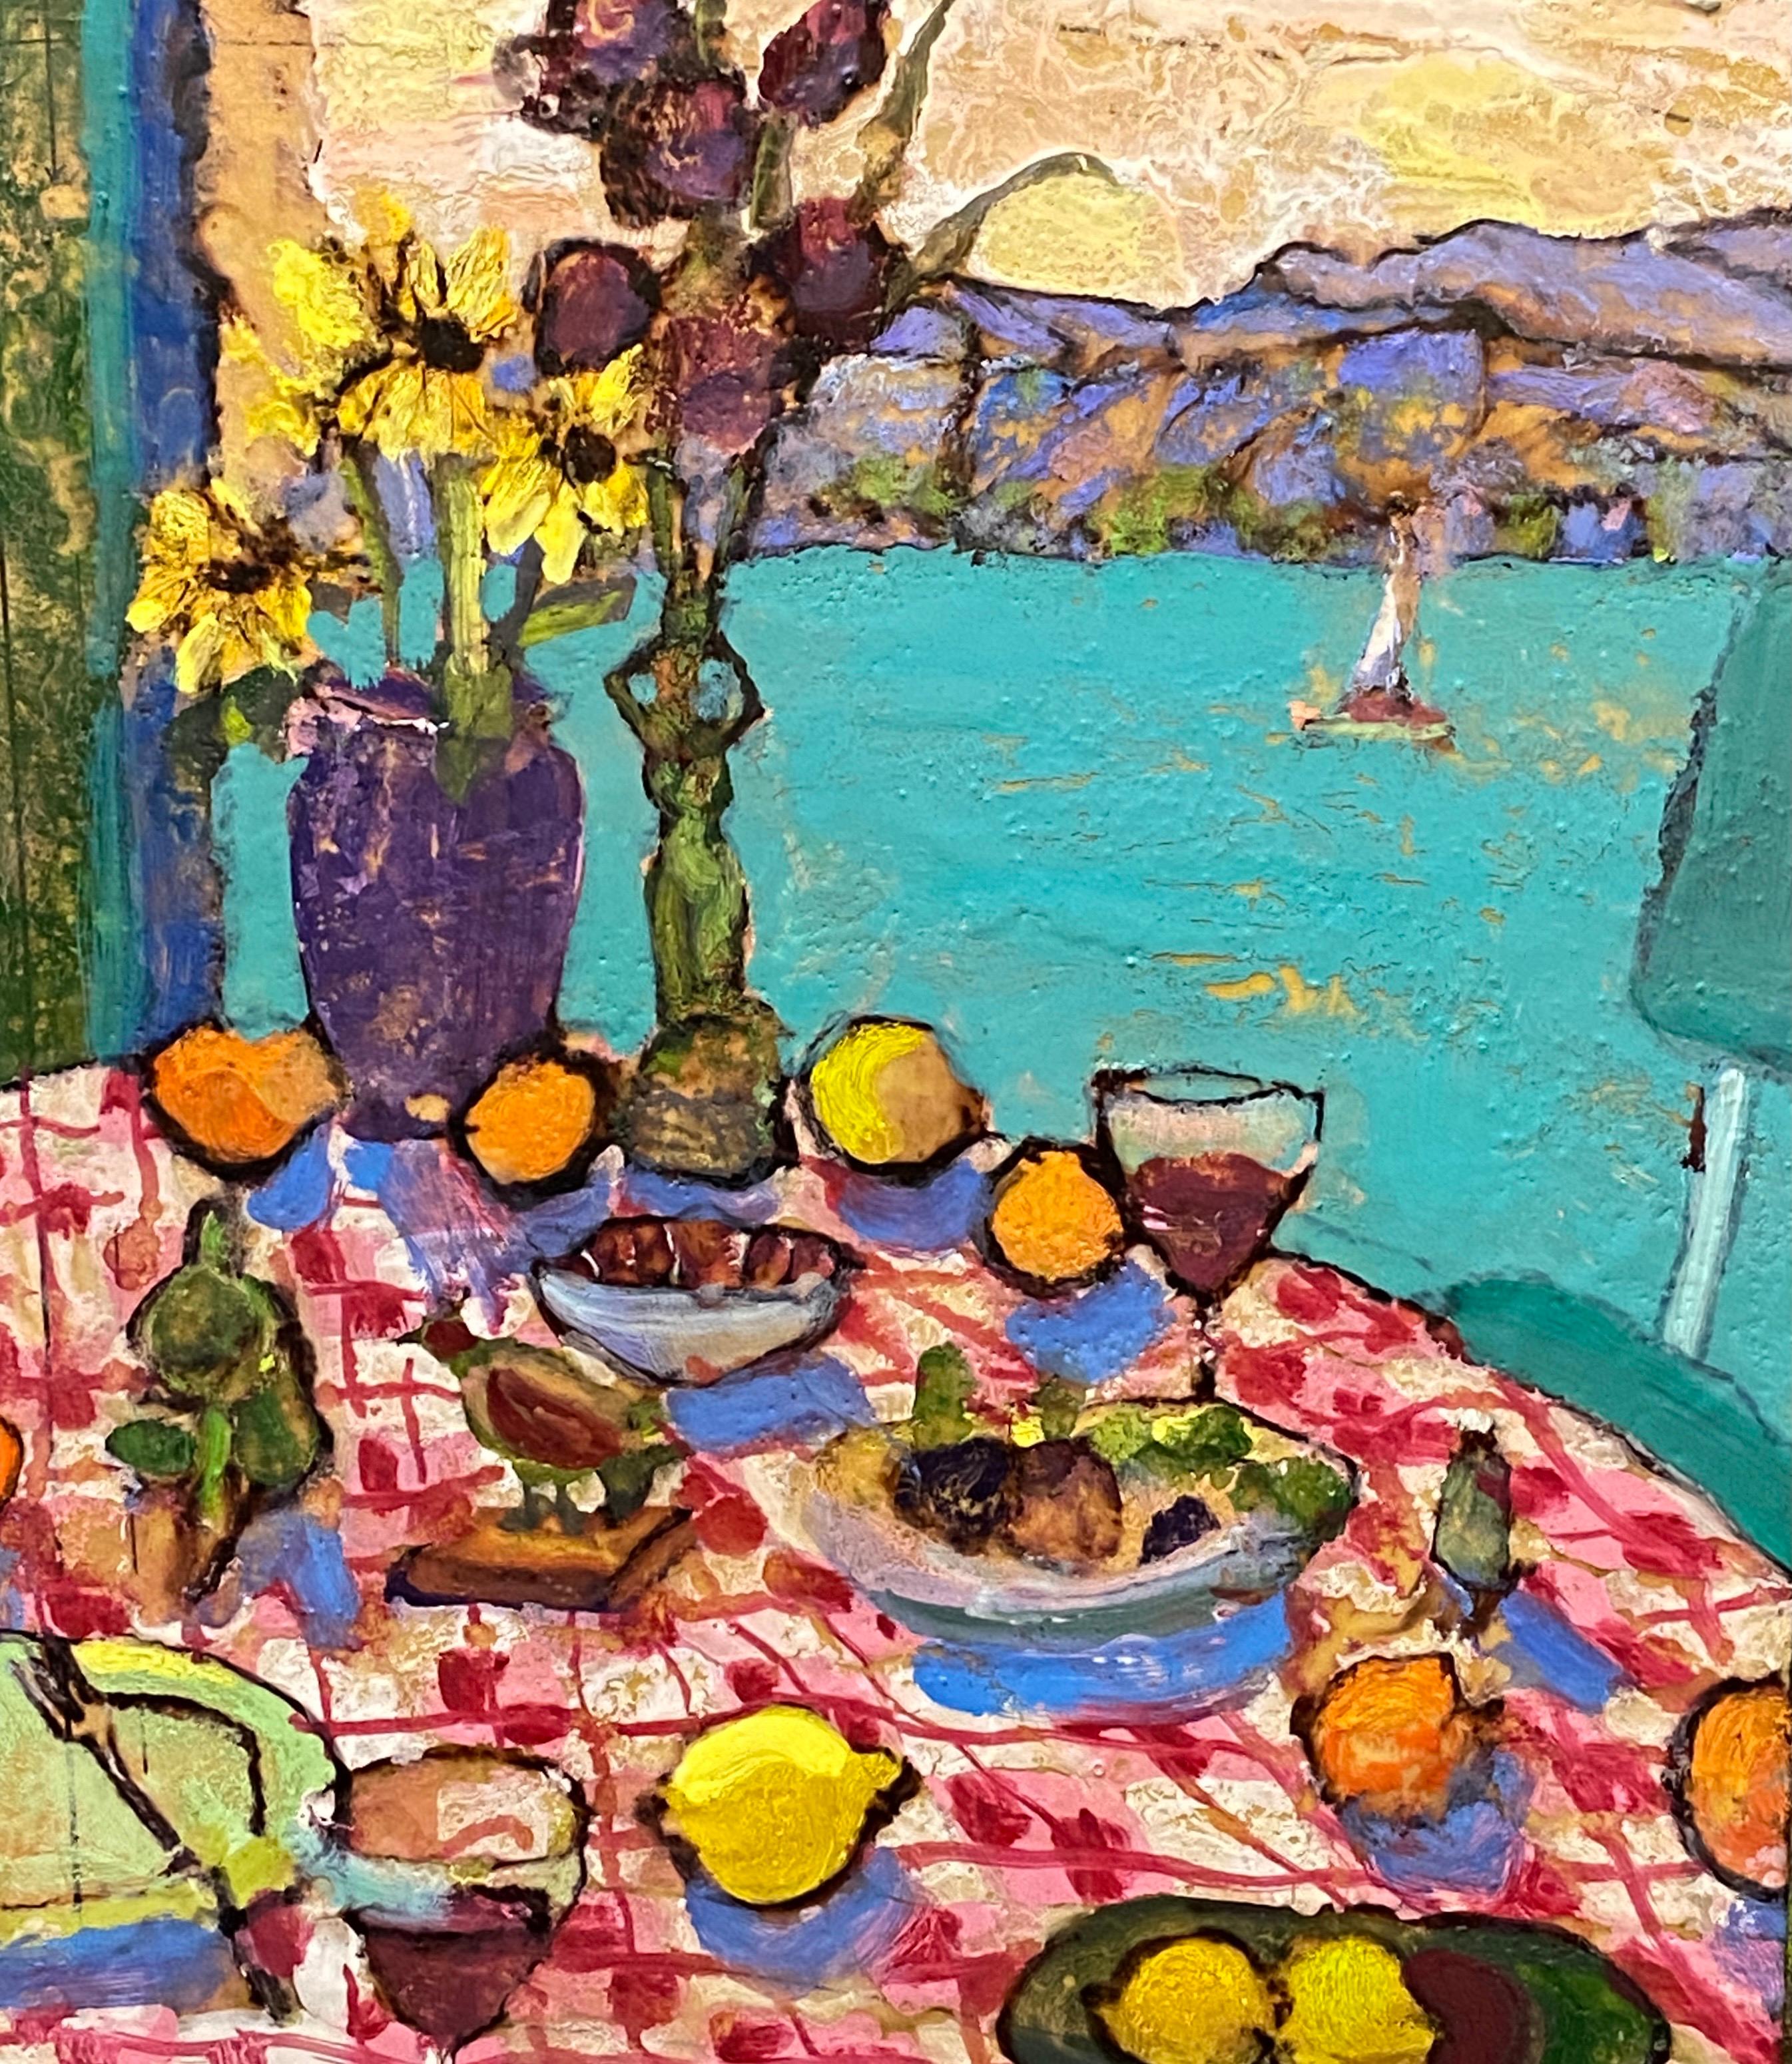 Bay Window, Original Painting